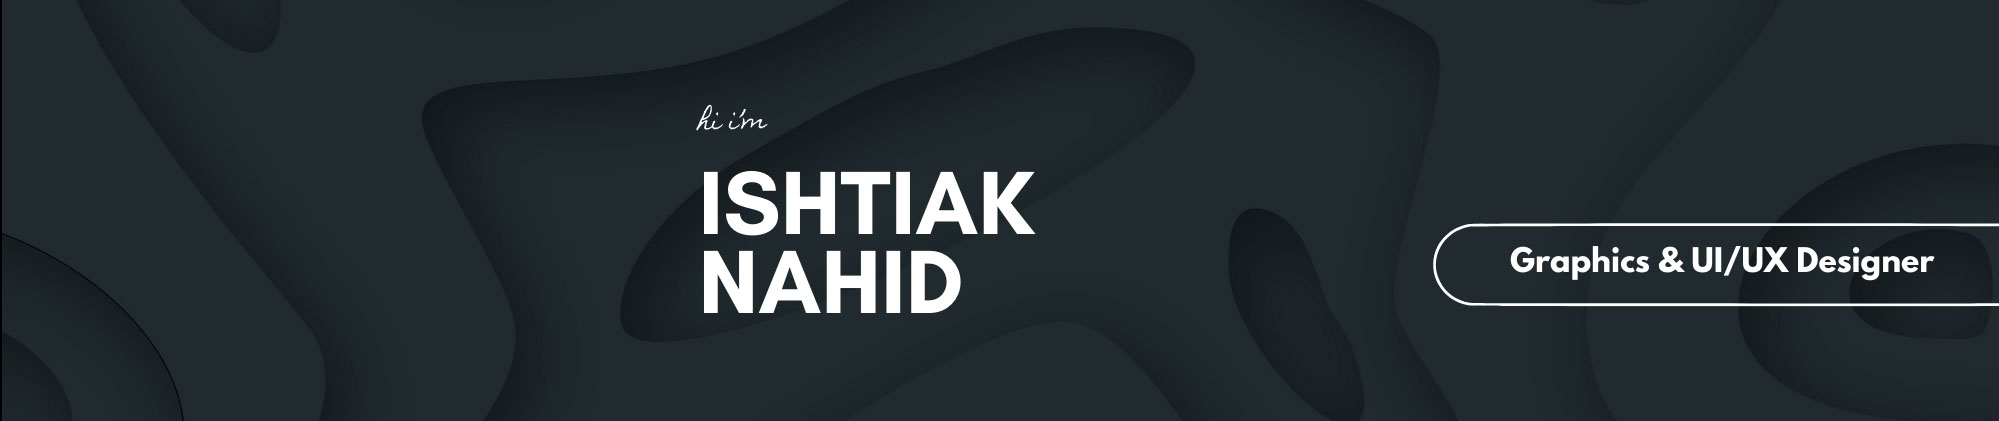 Ishtiak Nahid's profile banner